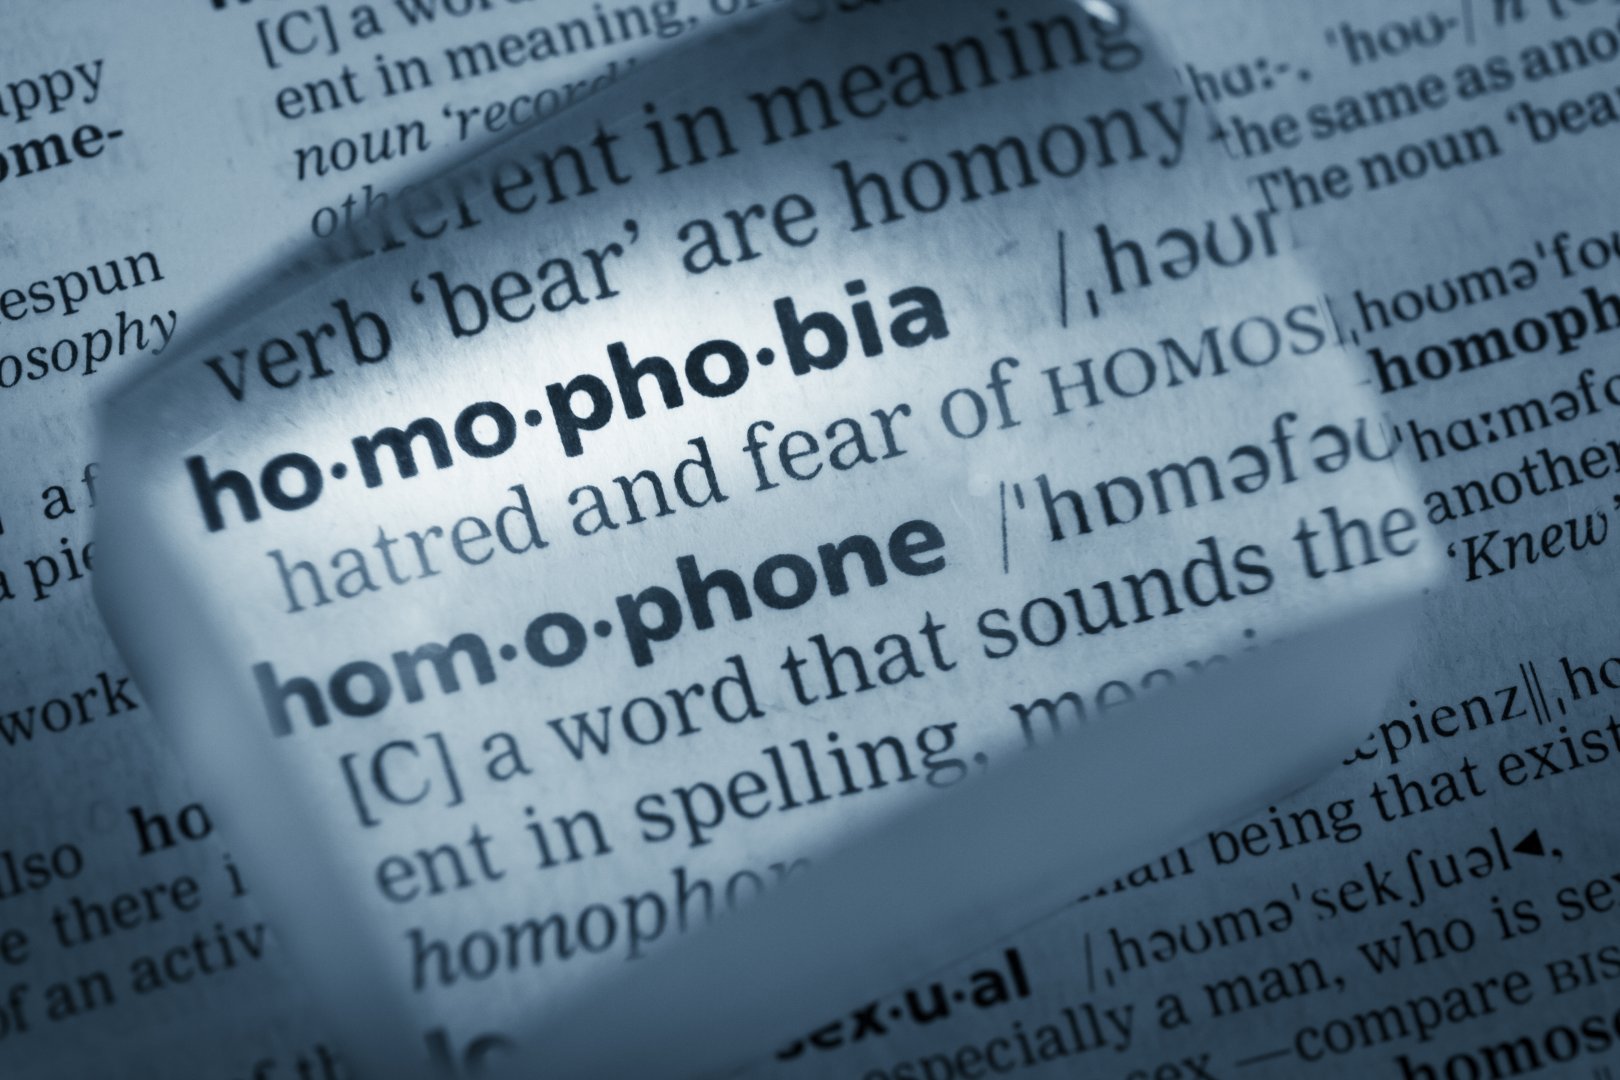 Homosexuality between phobia and terror